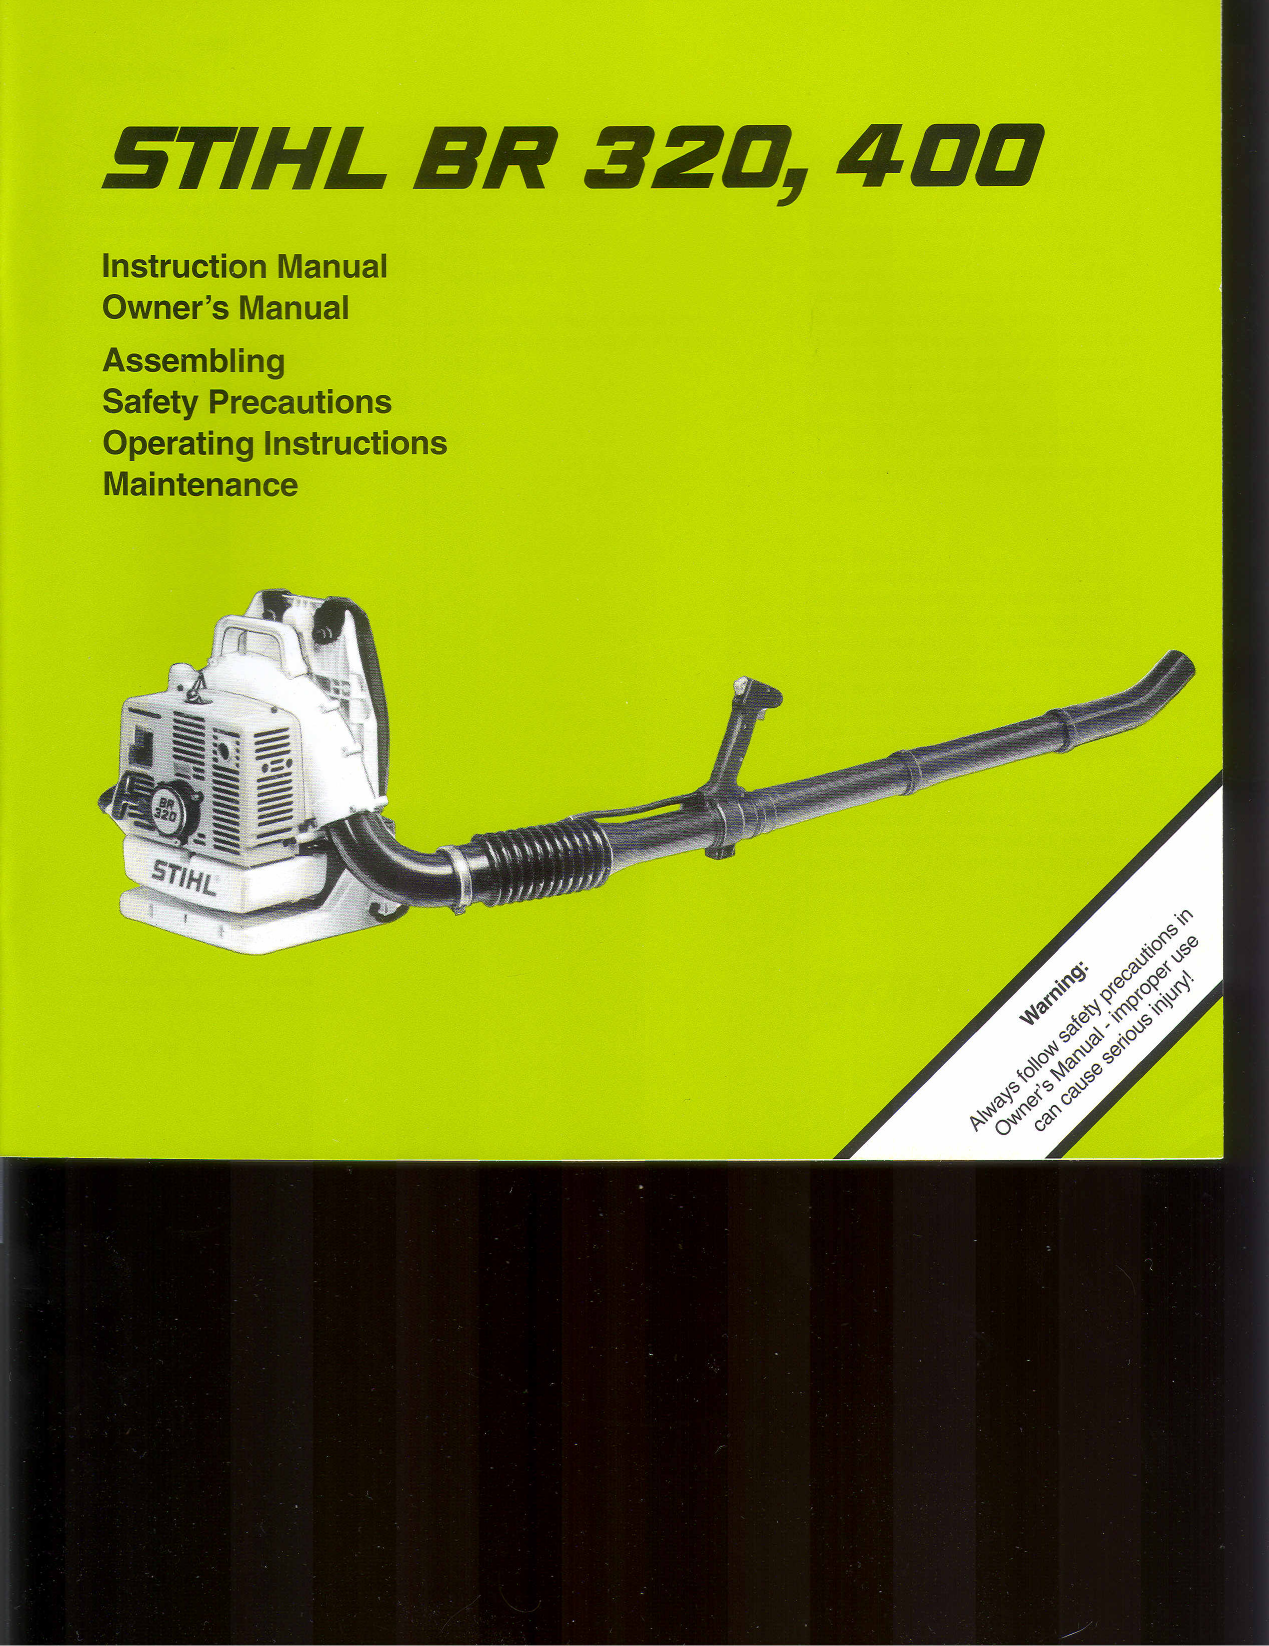 Stihl Br 320 Instruction Manual 320, 400